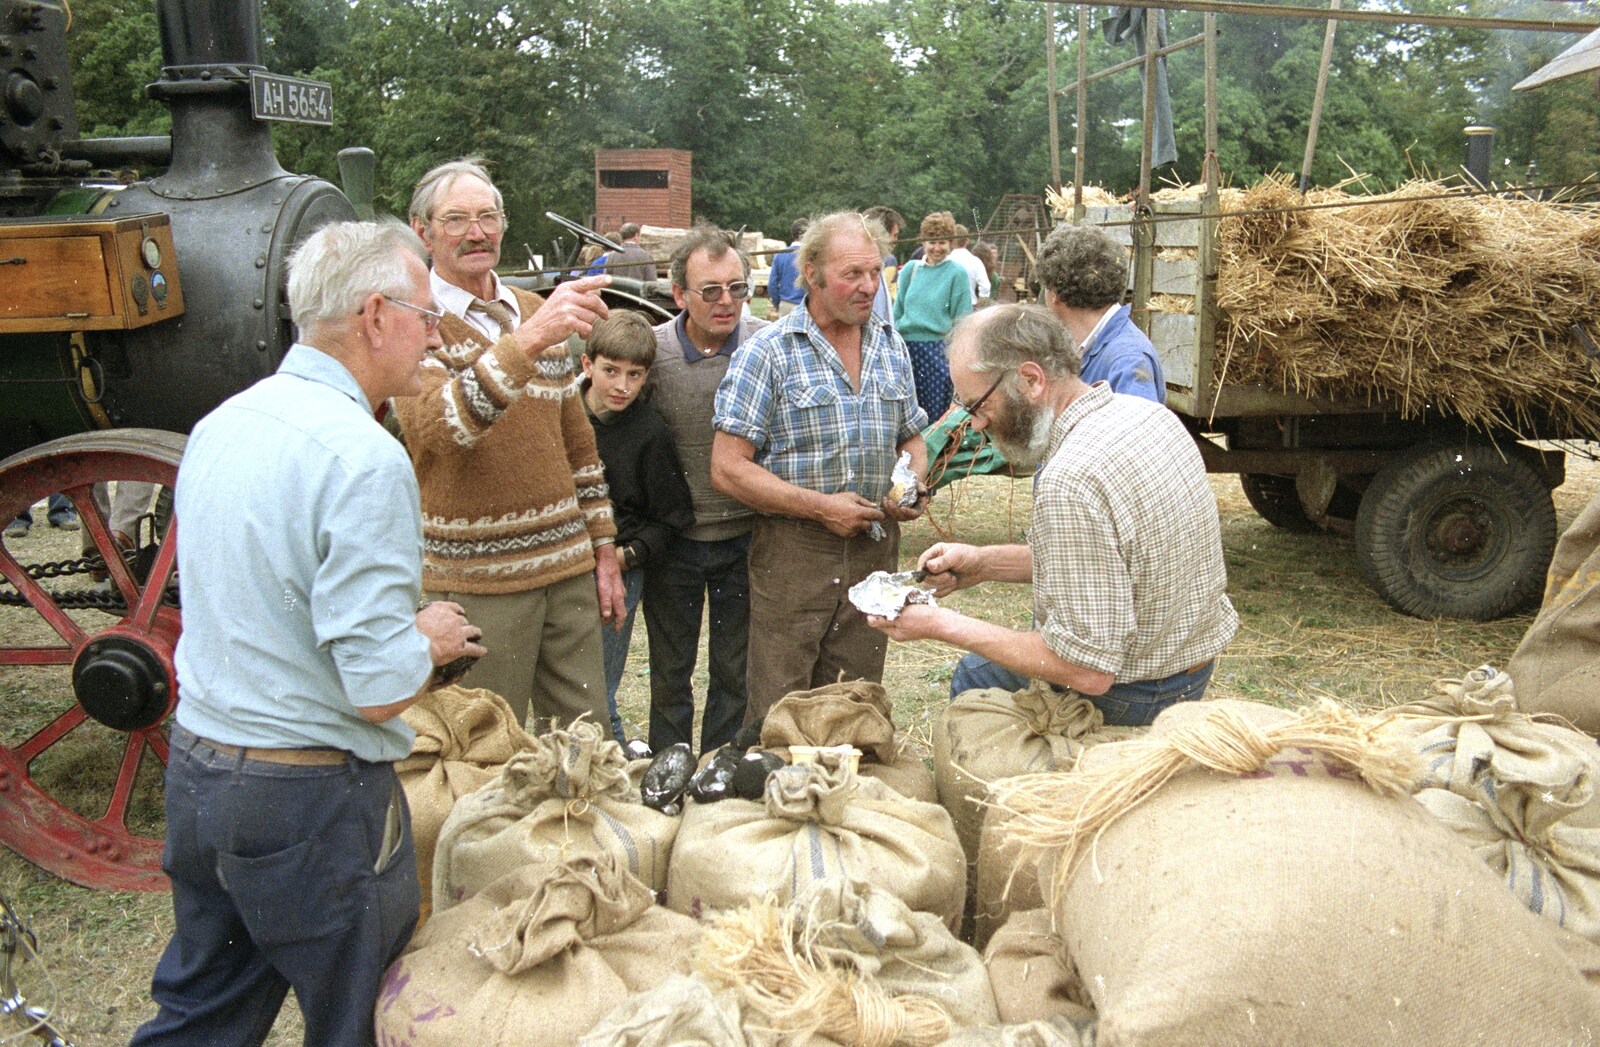 There's some activity over sacks of wheat from The Henham Steam Fair, Henham, Suffolk - 19th September 1990